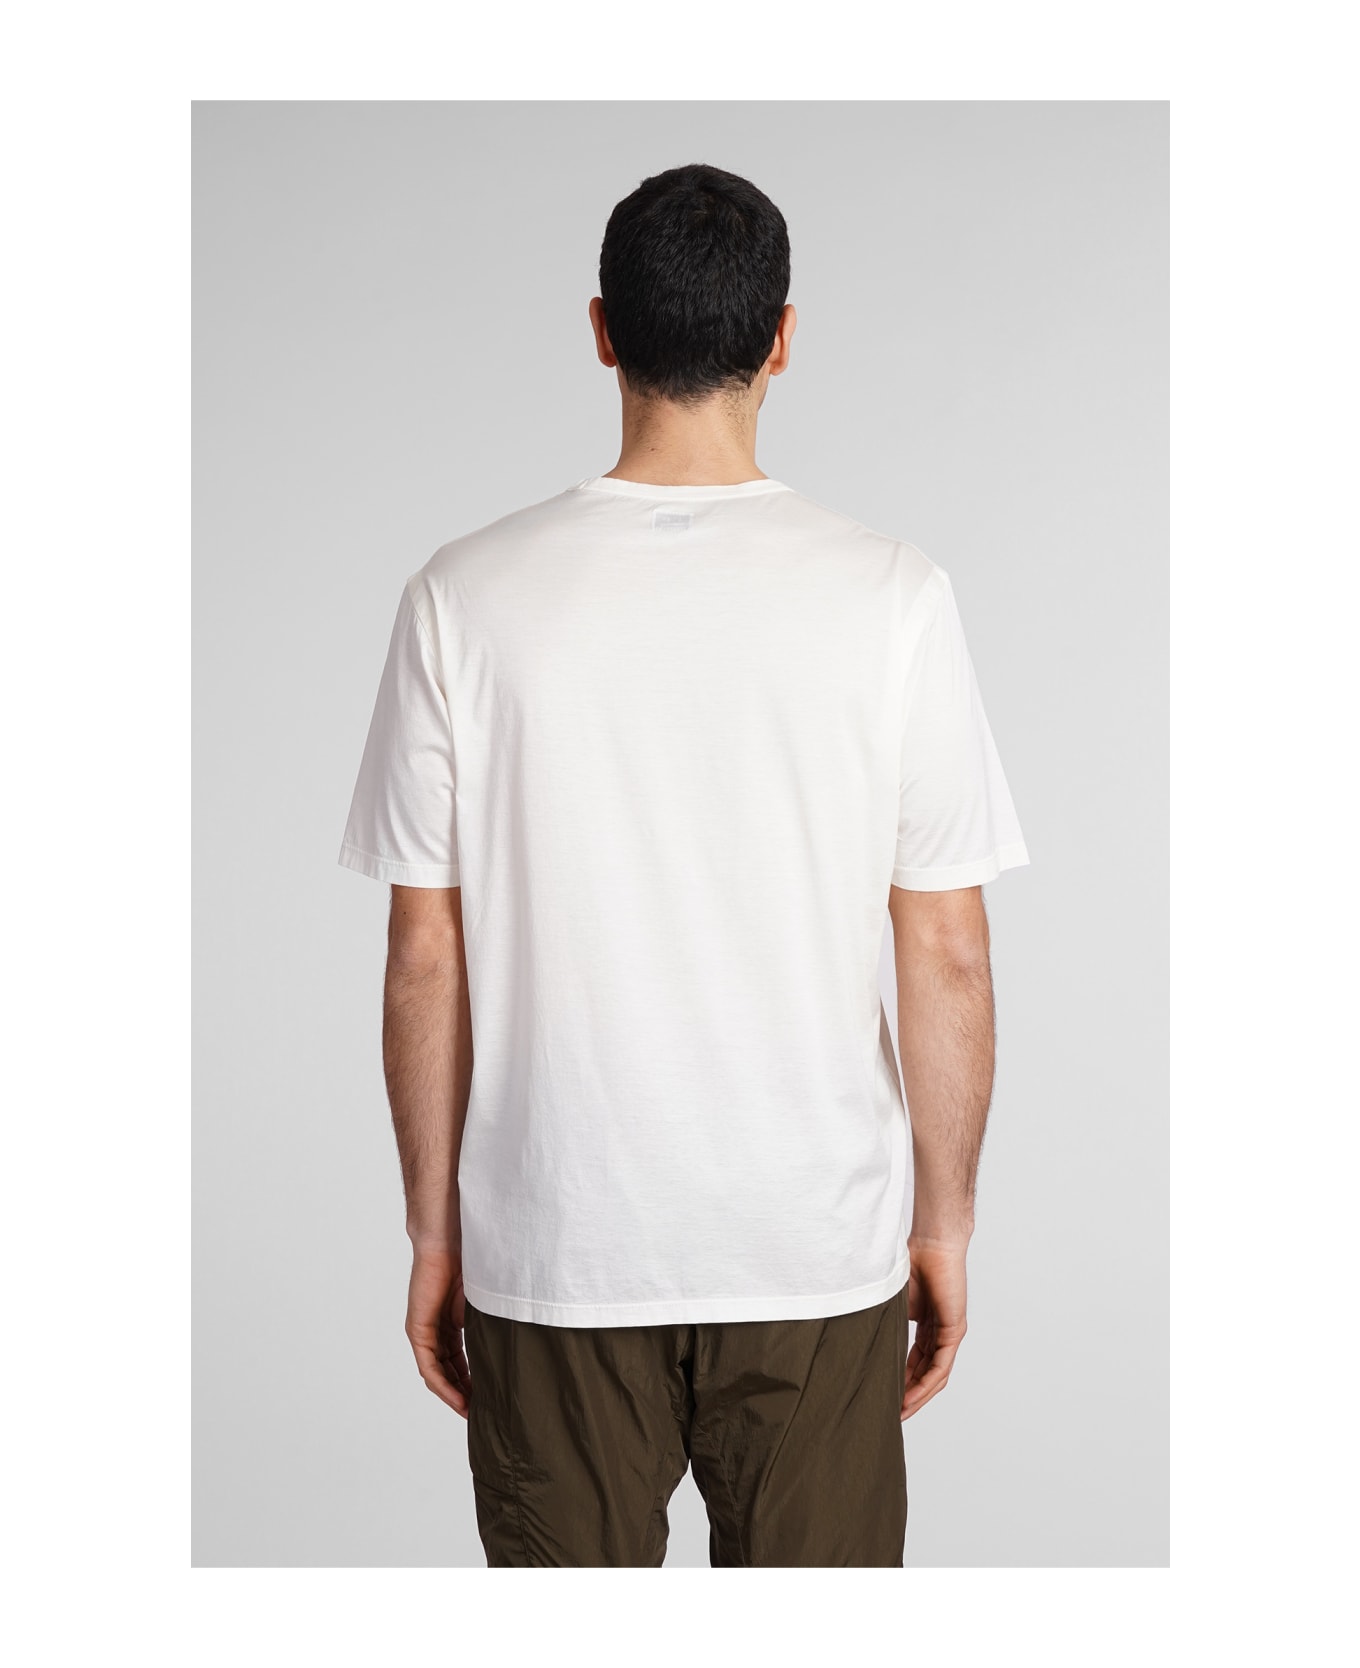 C.P. Company T-shirt In Beige Cotton - Gauze white シャツ